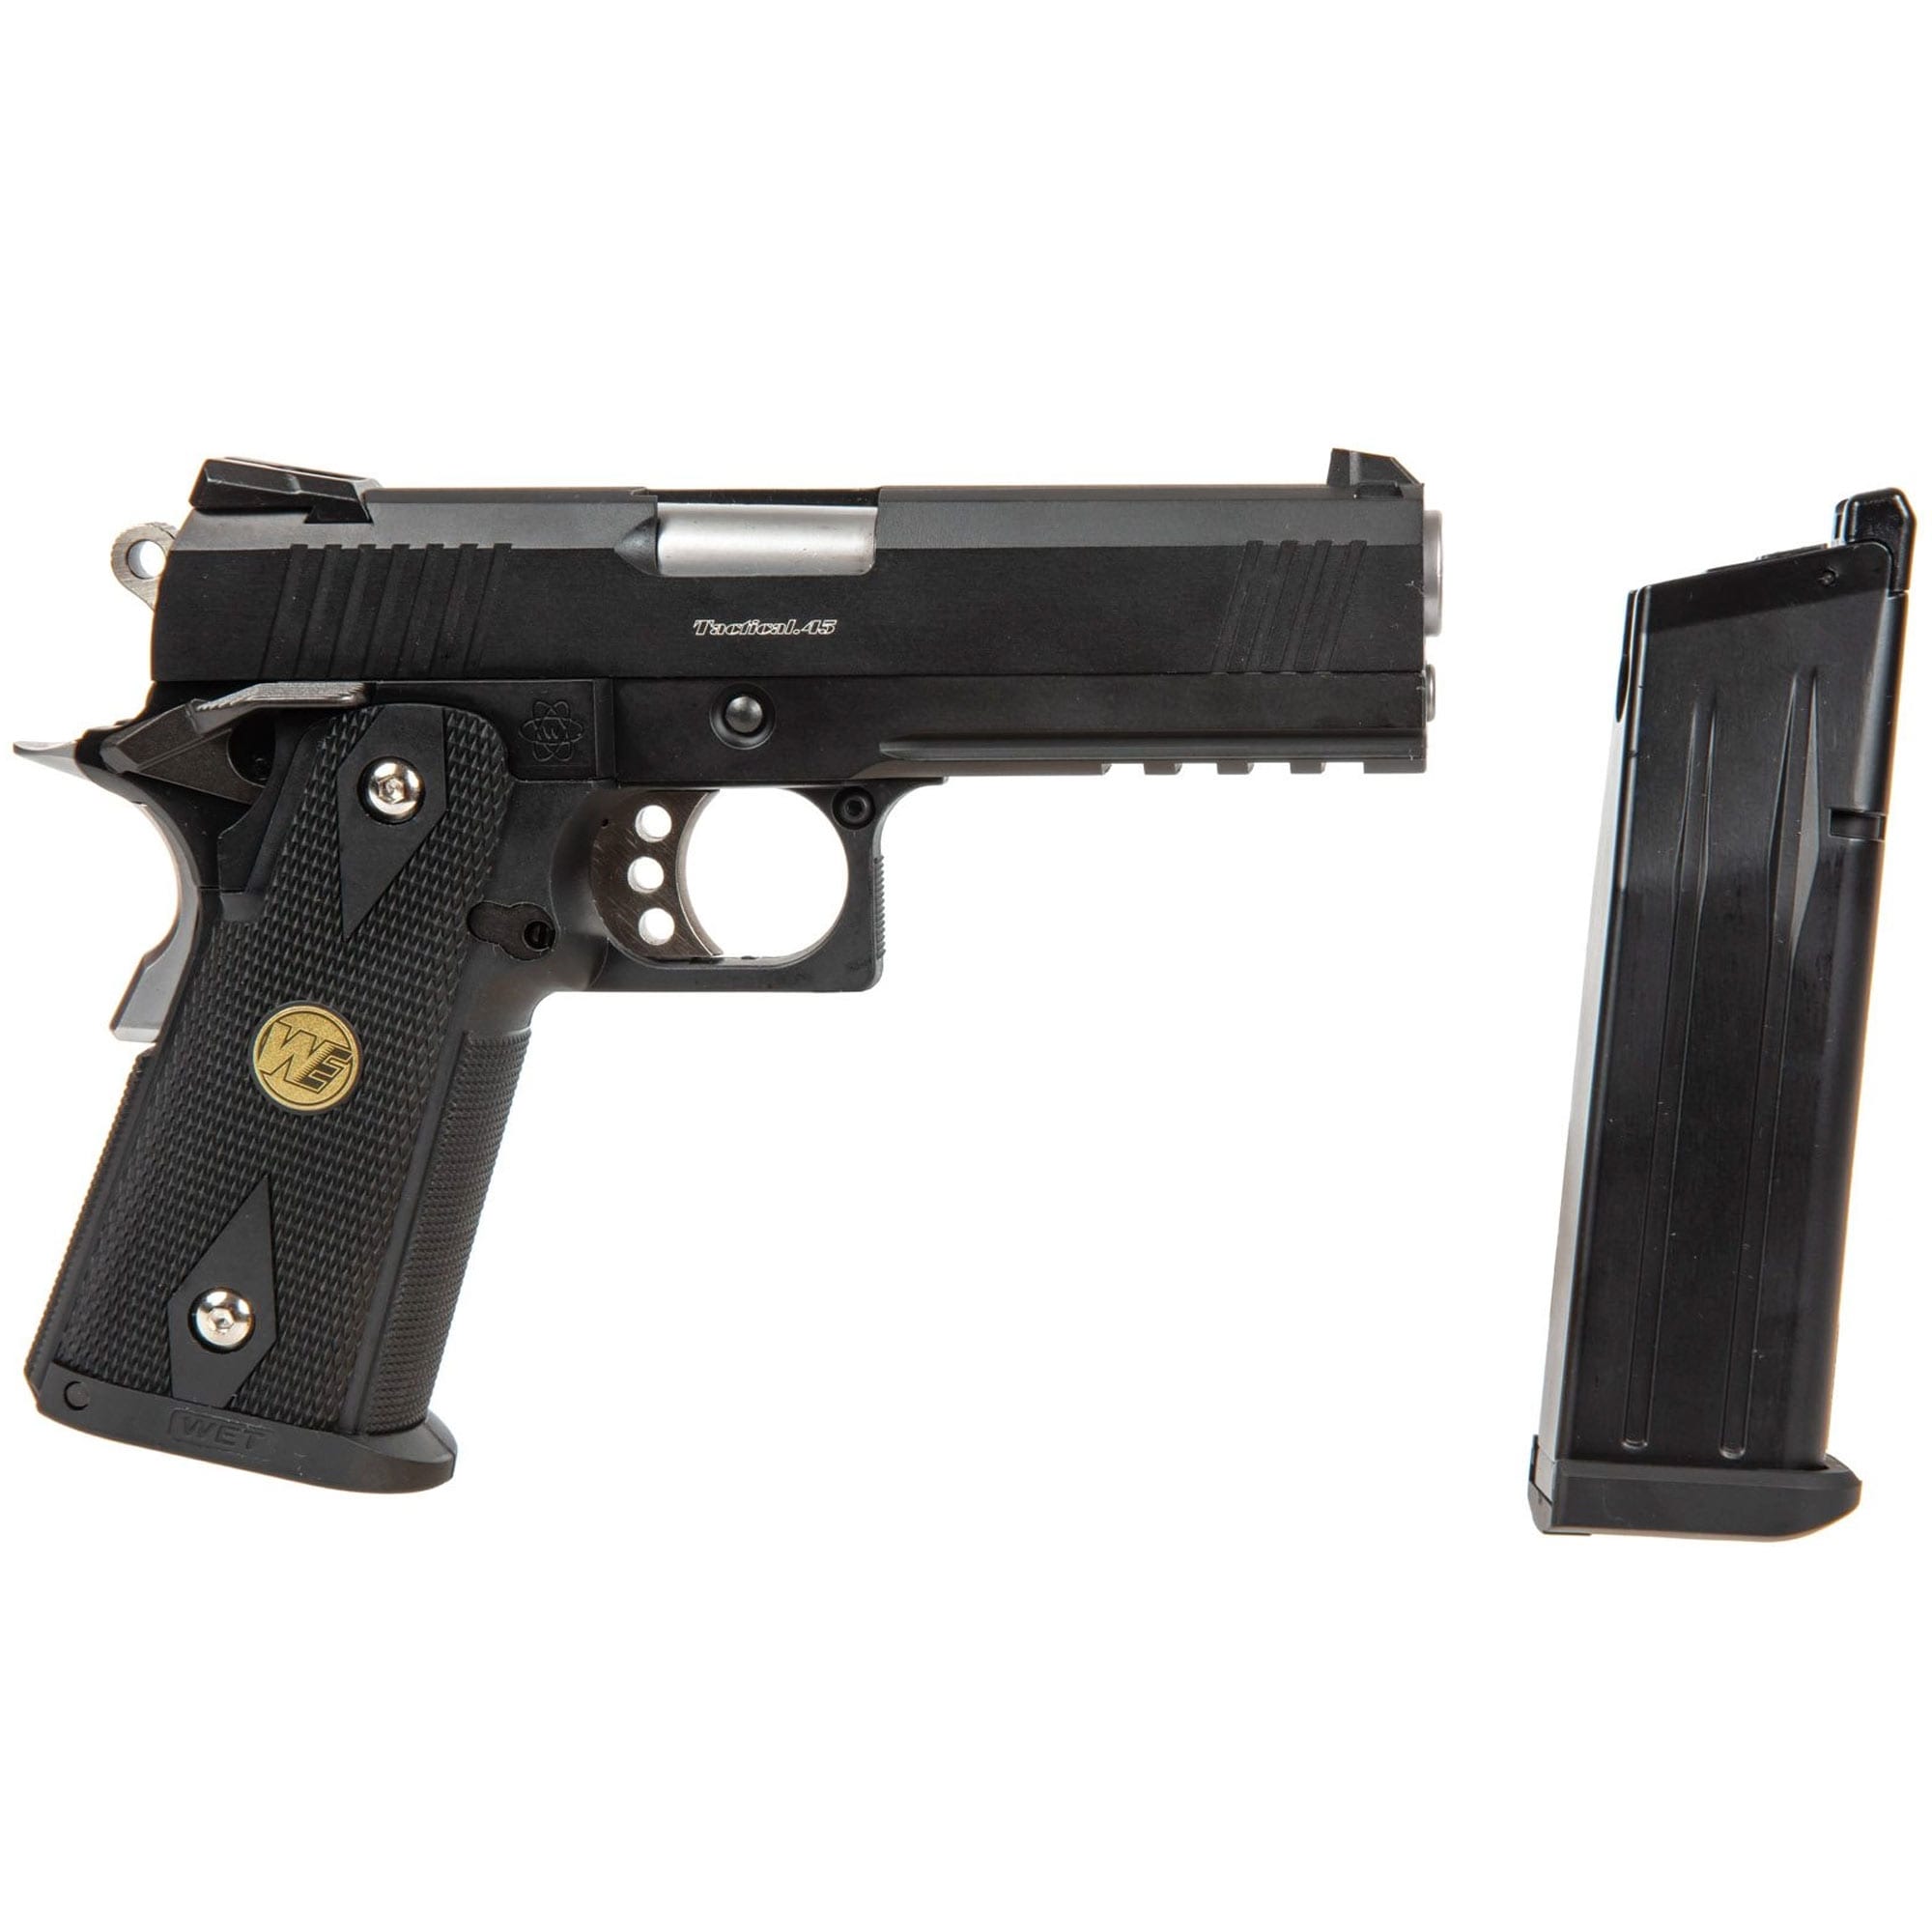 Пістолет GBB WE Hi-Capa 4.3 Maple Leaf OPS Special Edition - Чорний